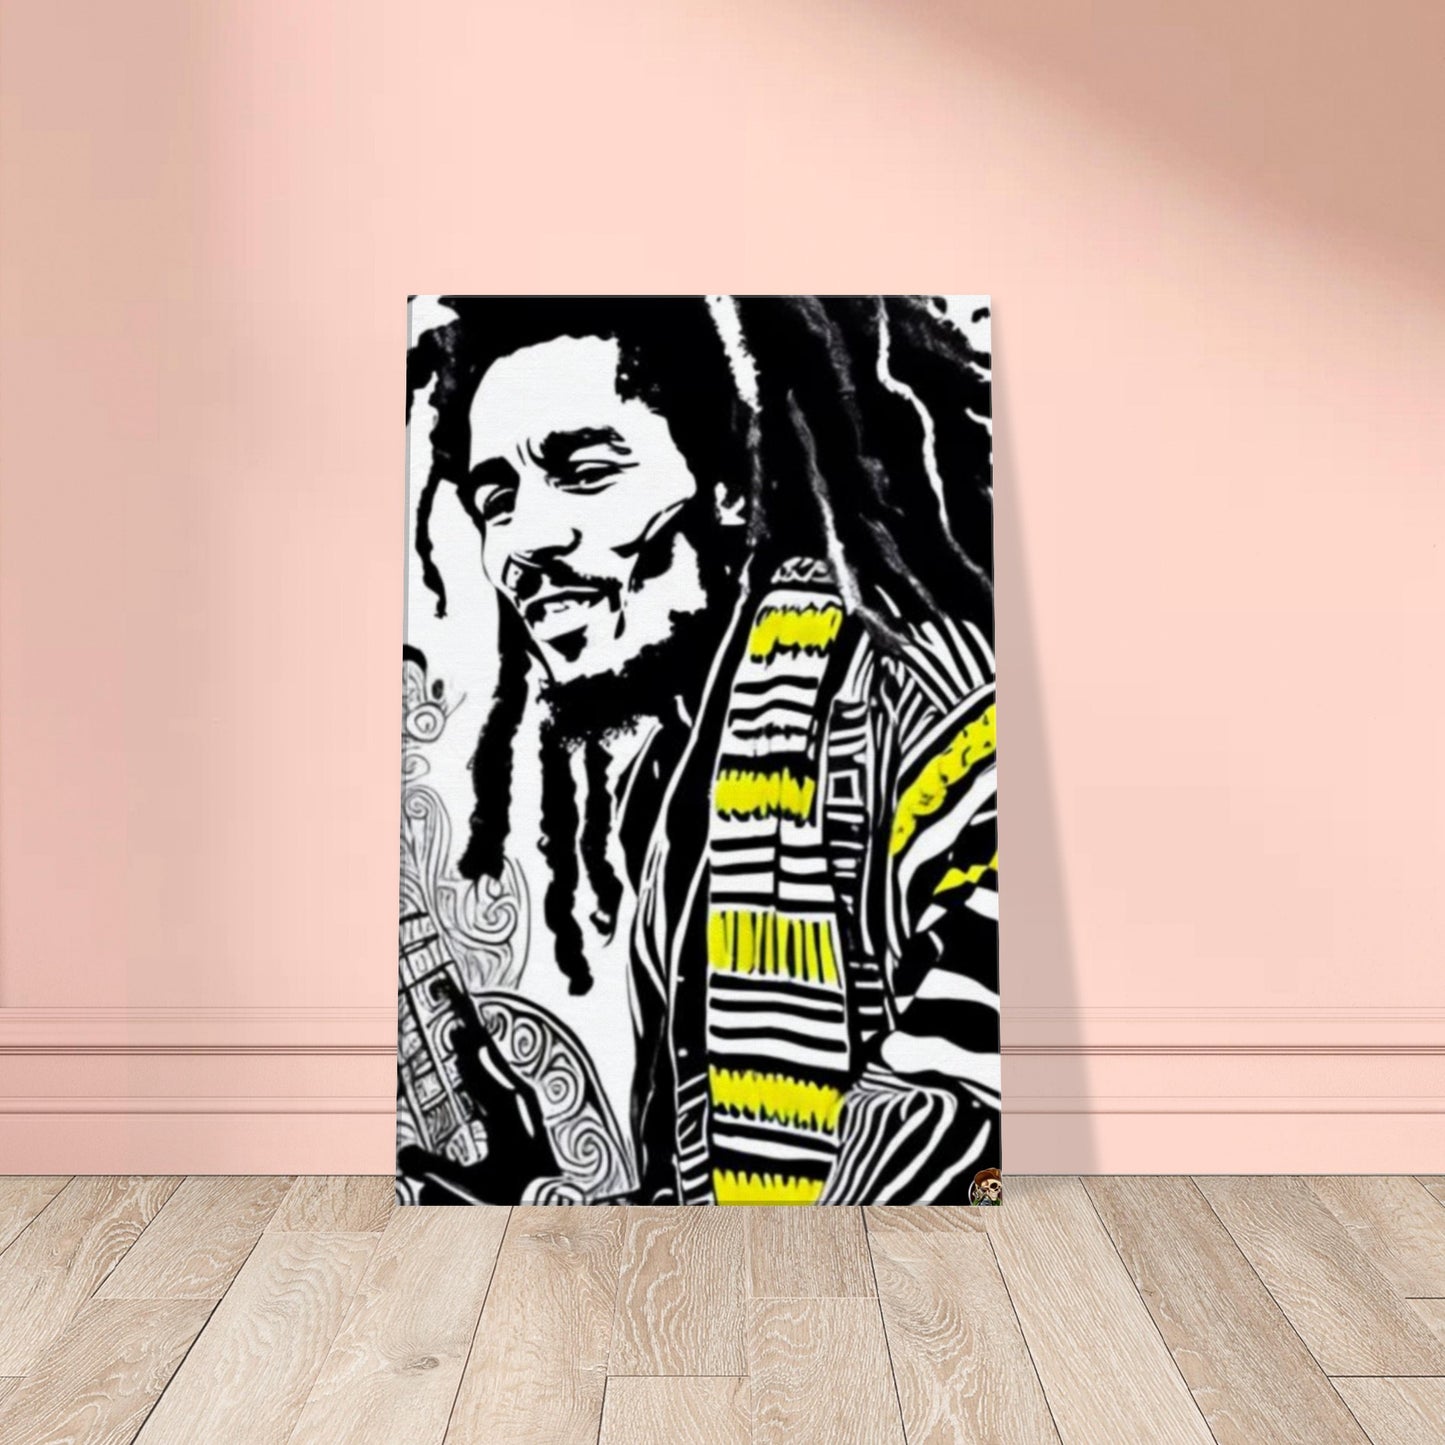 Bob Marley Canvas created by Ötzi Frosty